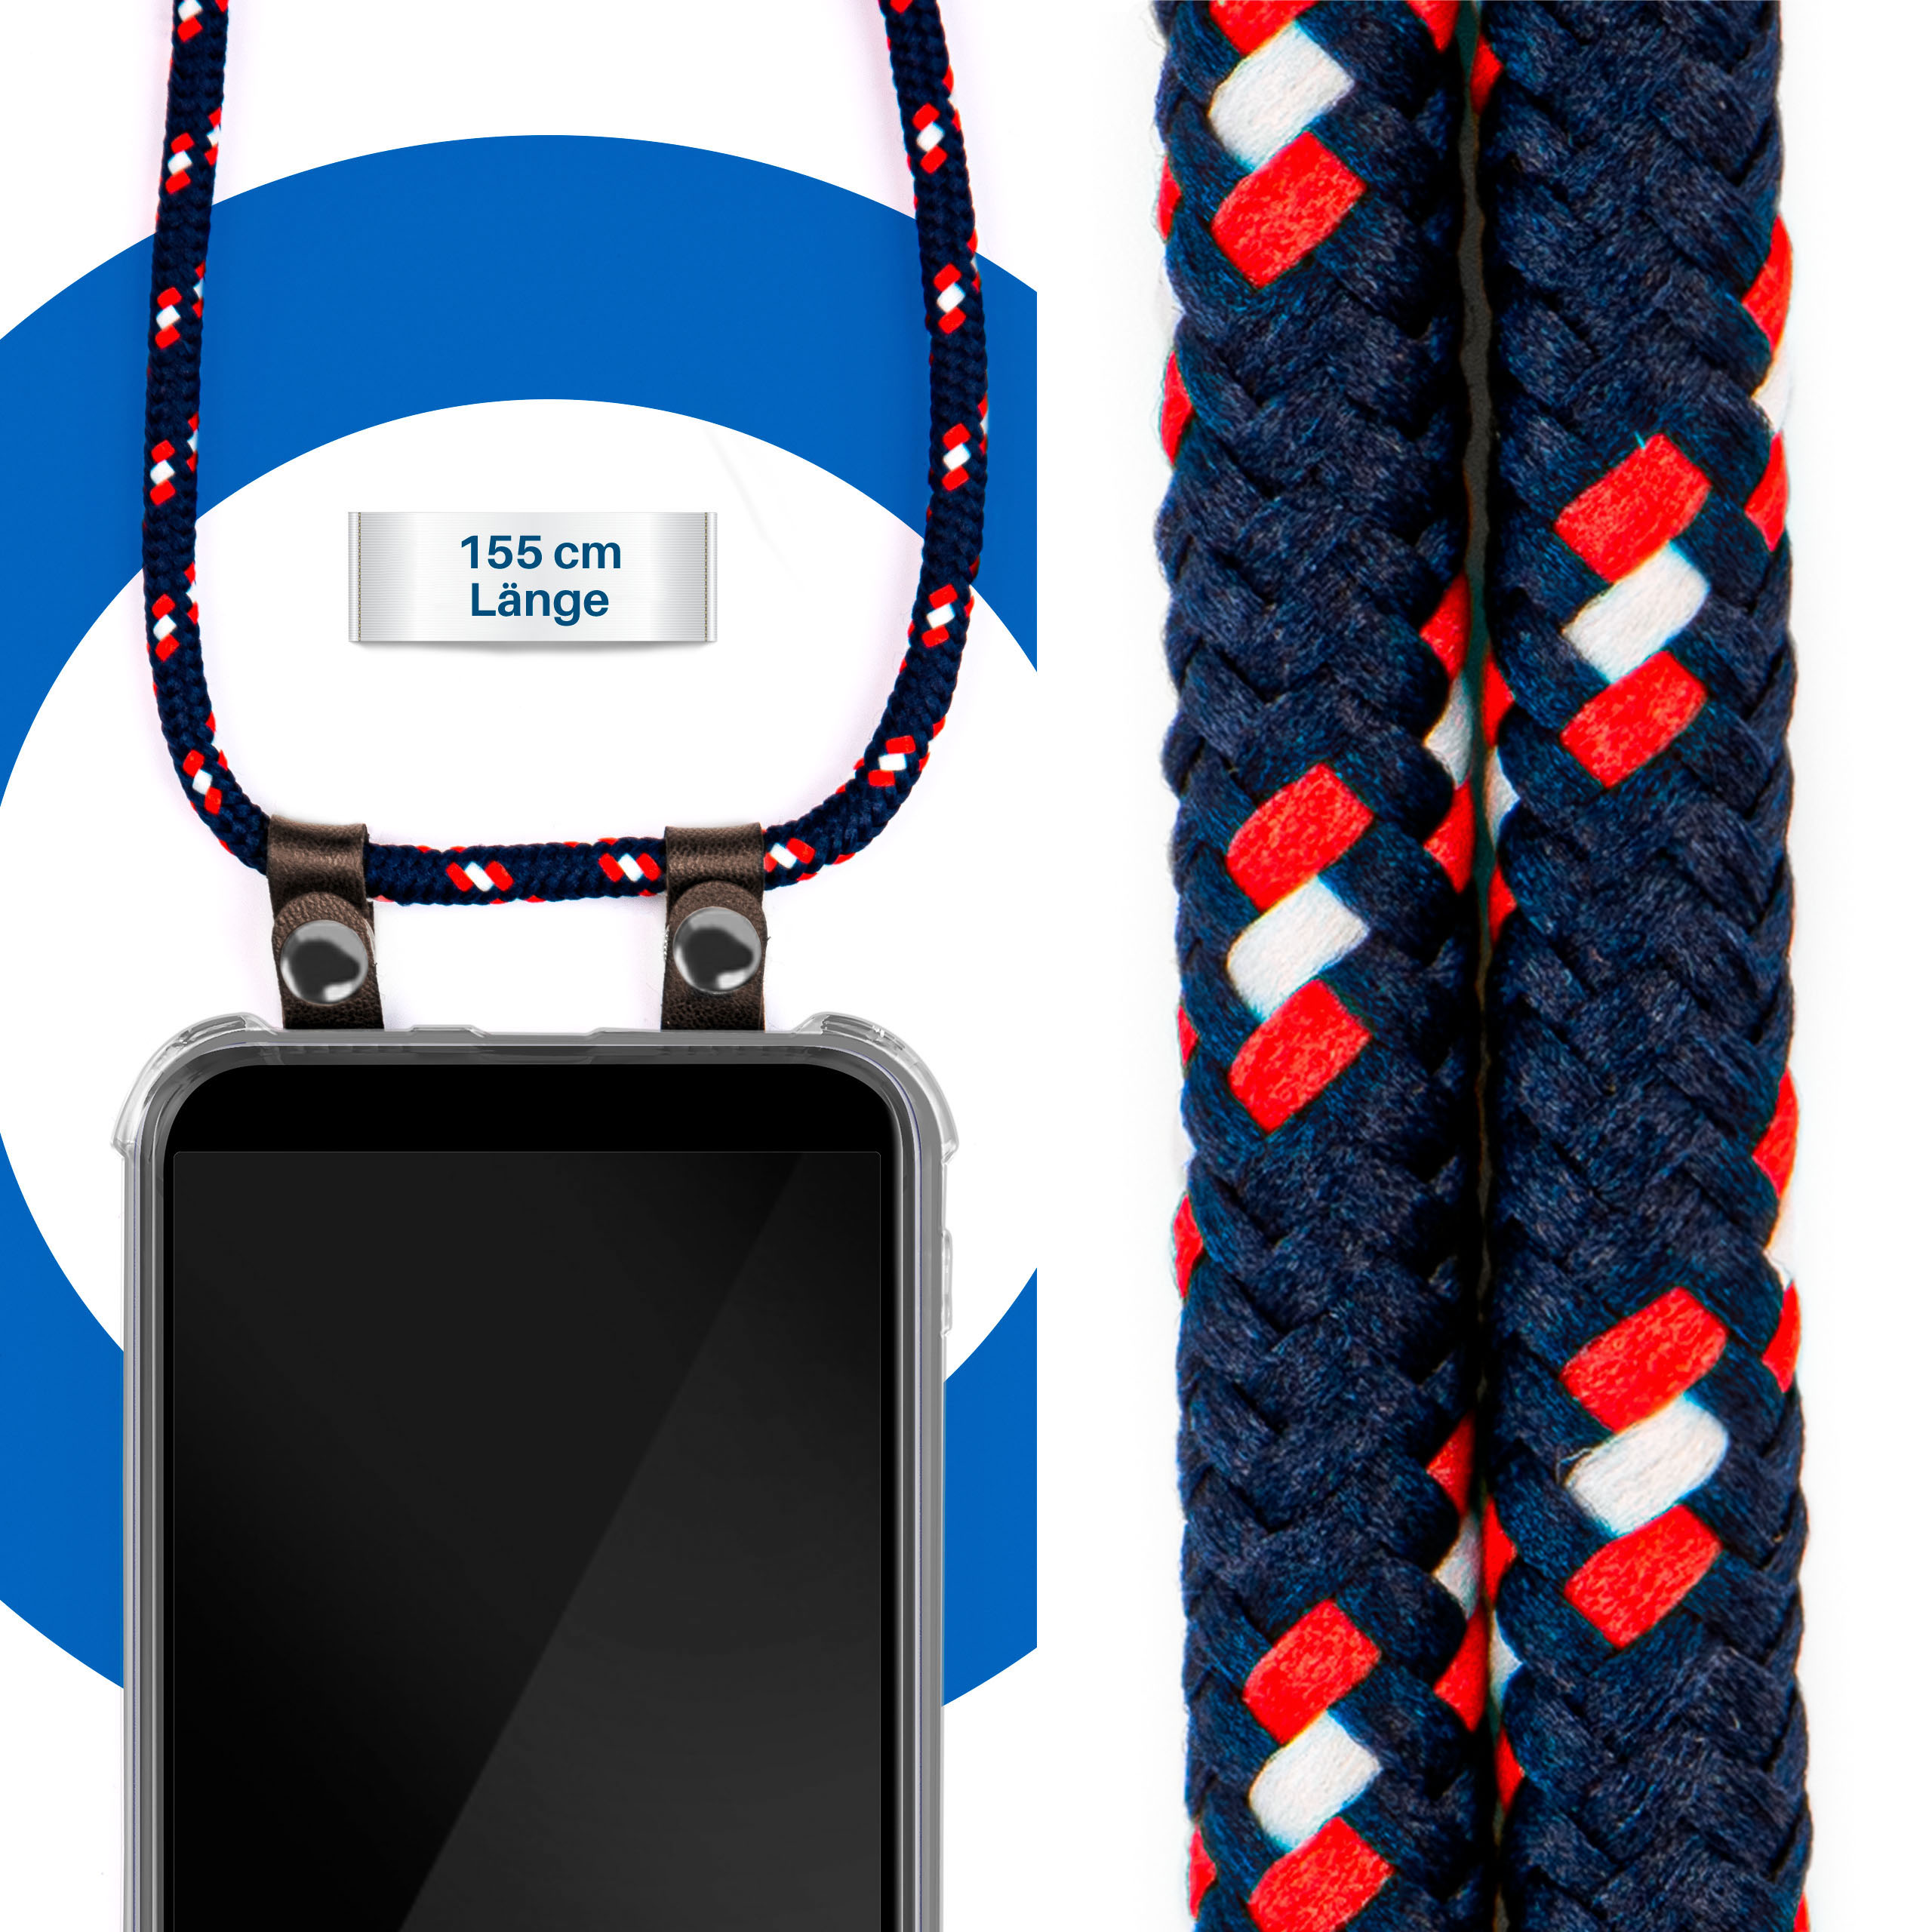 Samsung, Galaxy A5 MOEX Blau Weiss (2017), Backcover, Handykette, Rot